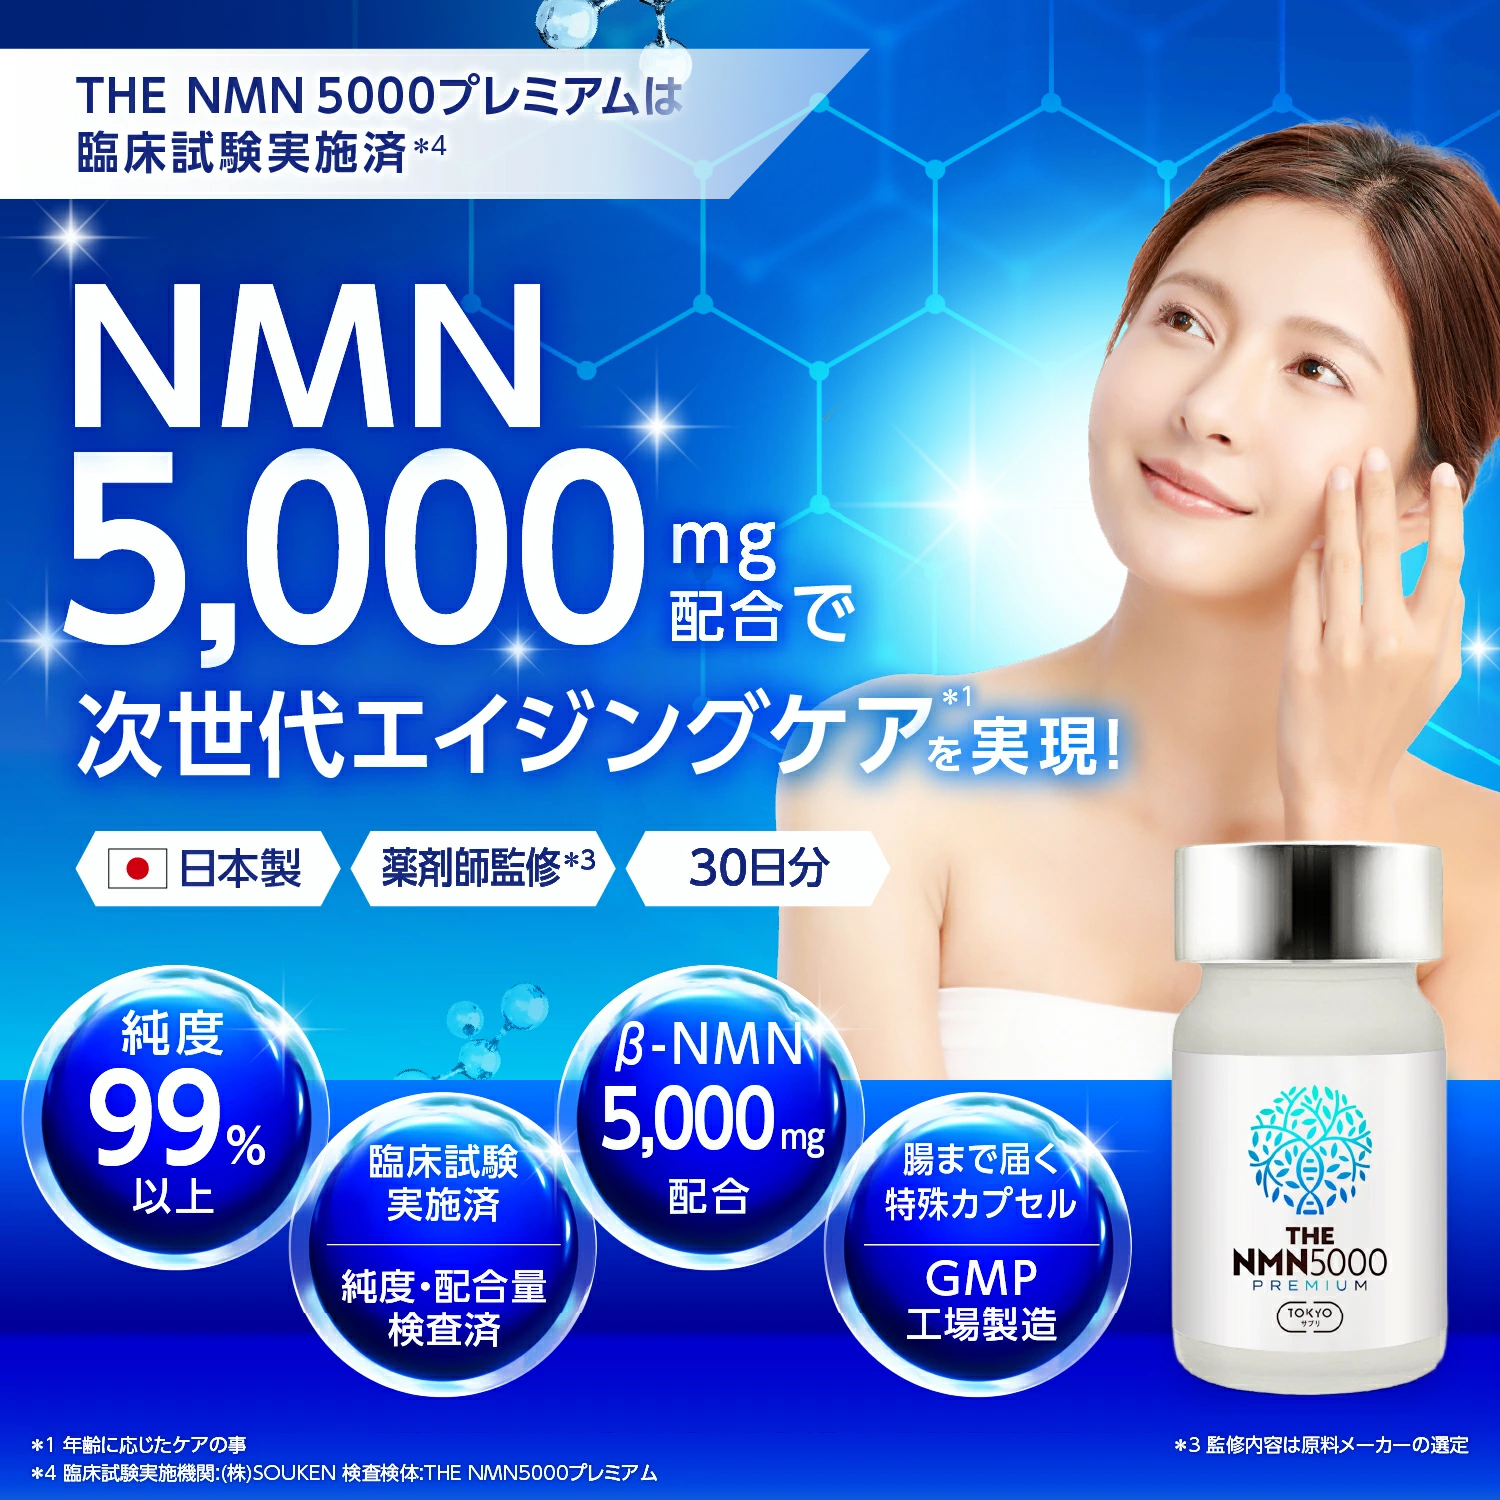 NMN 5000mg プレミアム 純度99%以上 臨床試験実施 日本製 薬剤師監修 